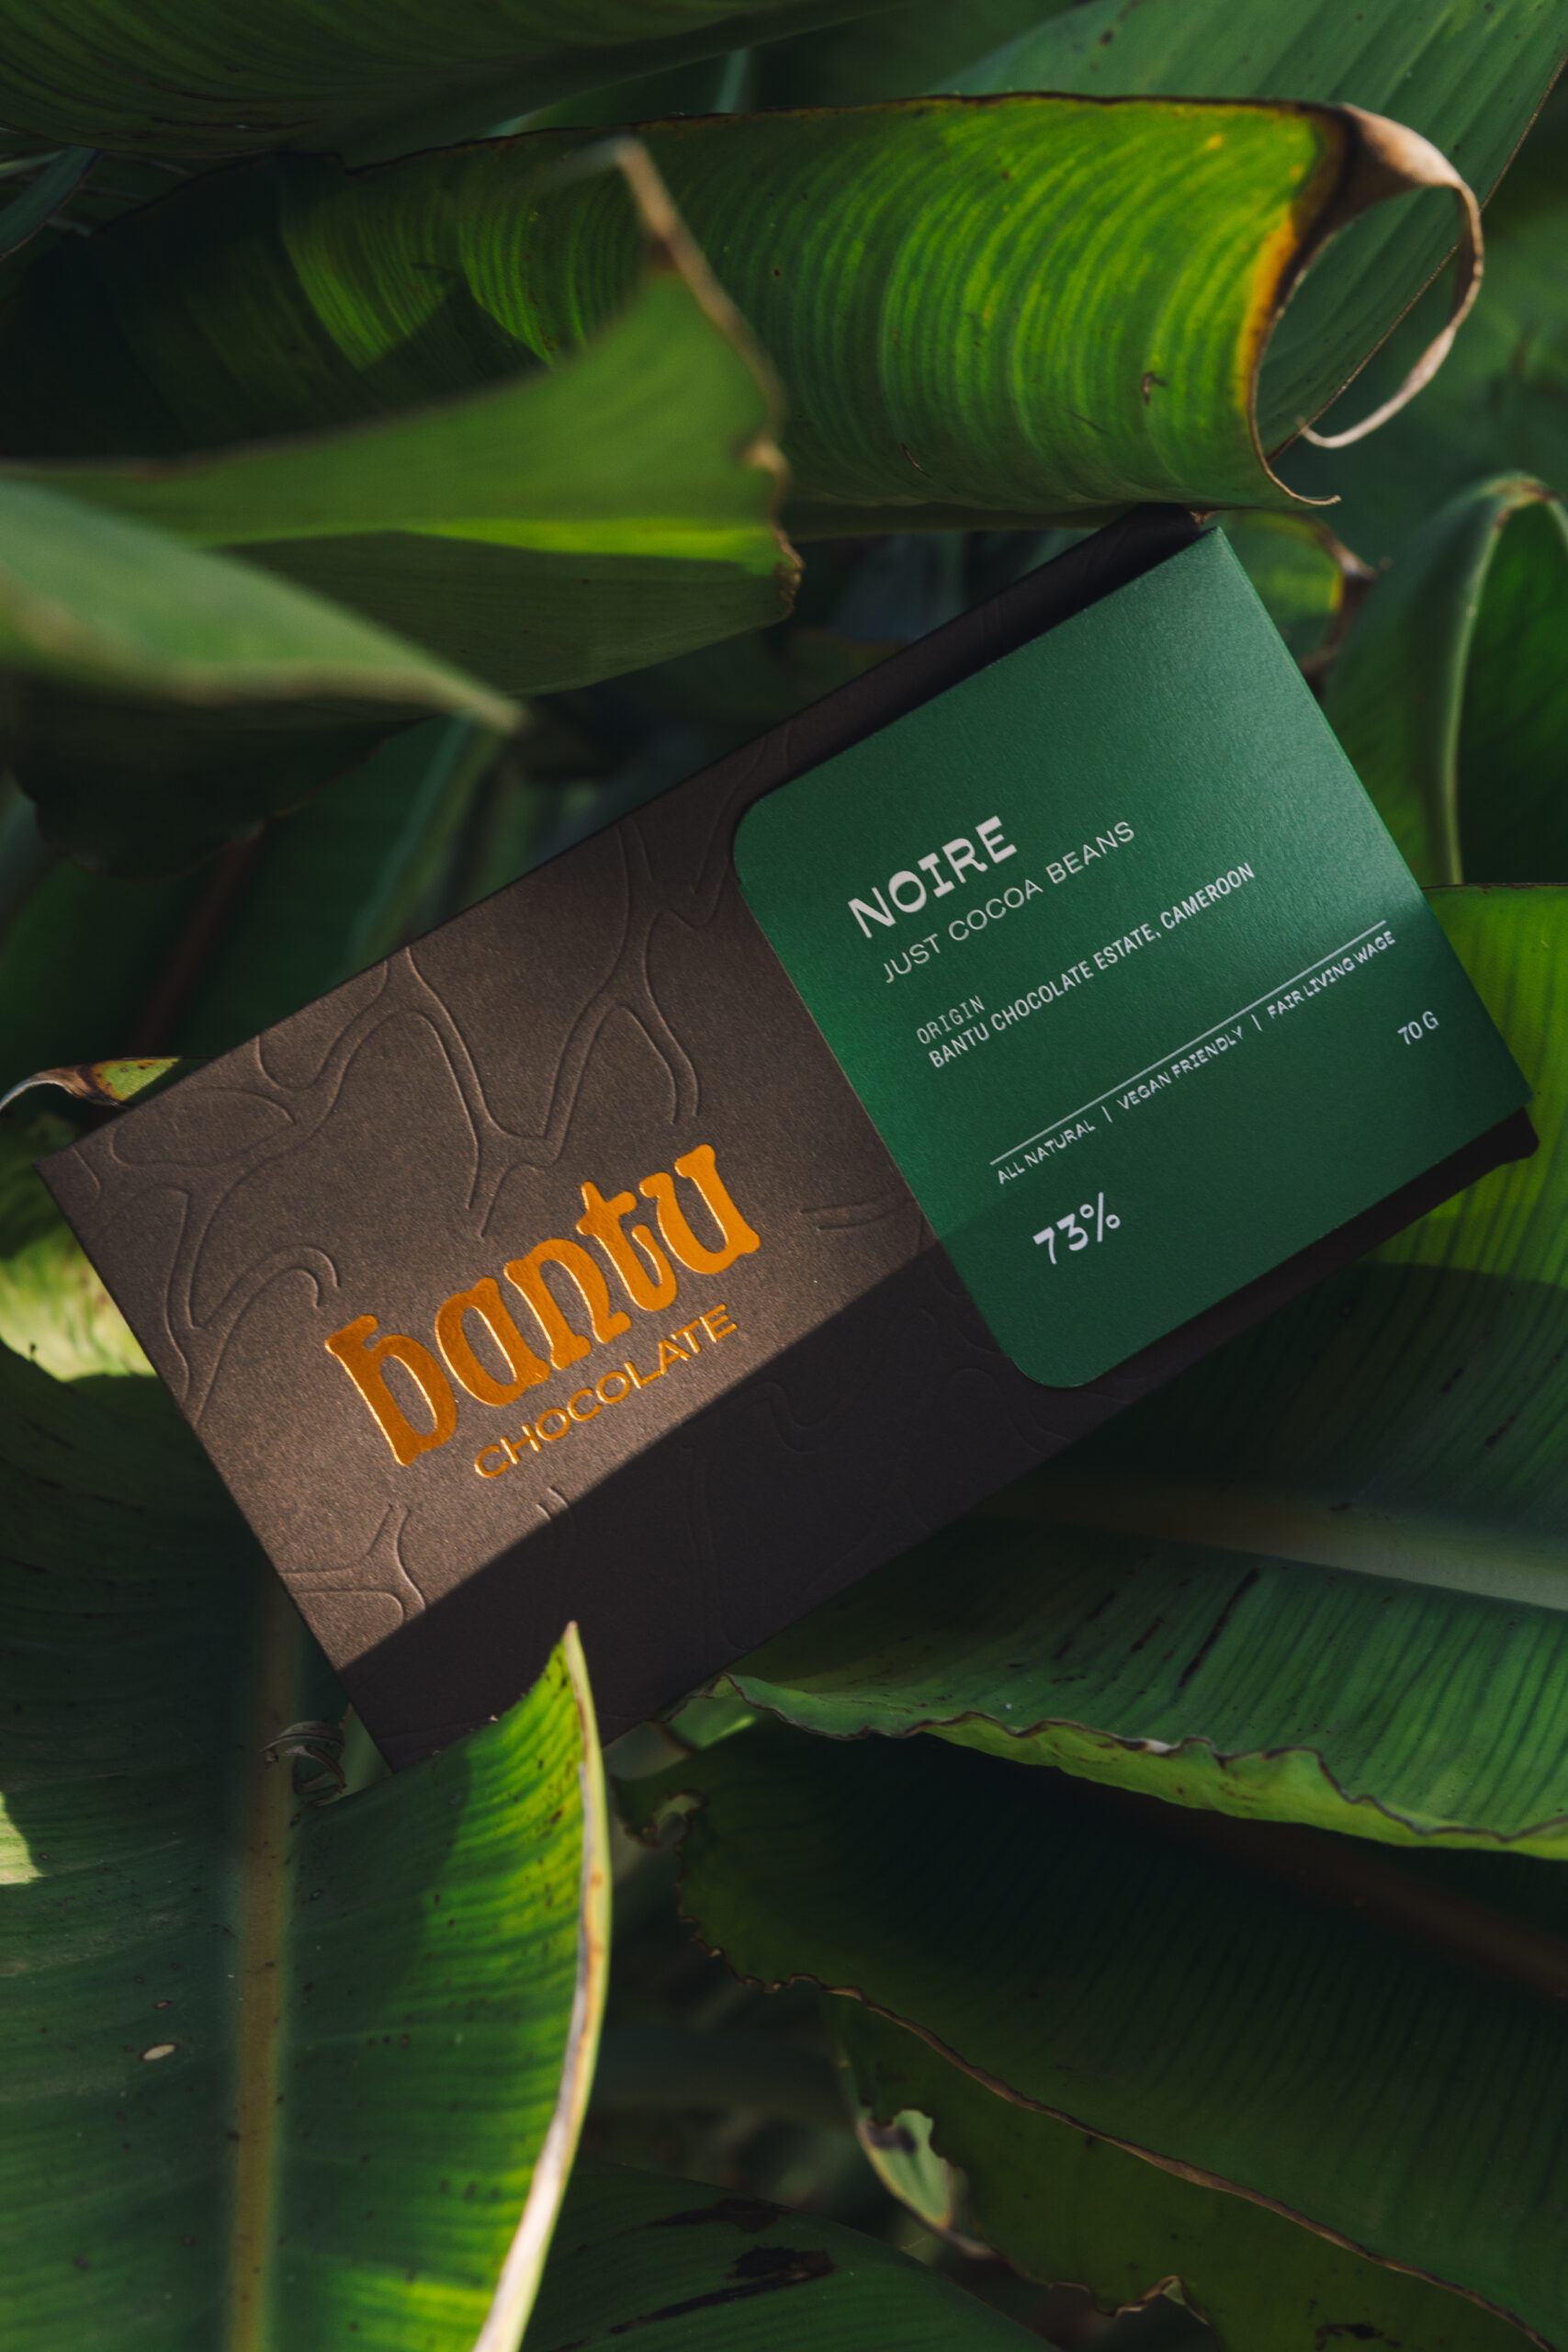 Noire 73% Bantu Chocolate label lying on plaintain leaves